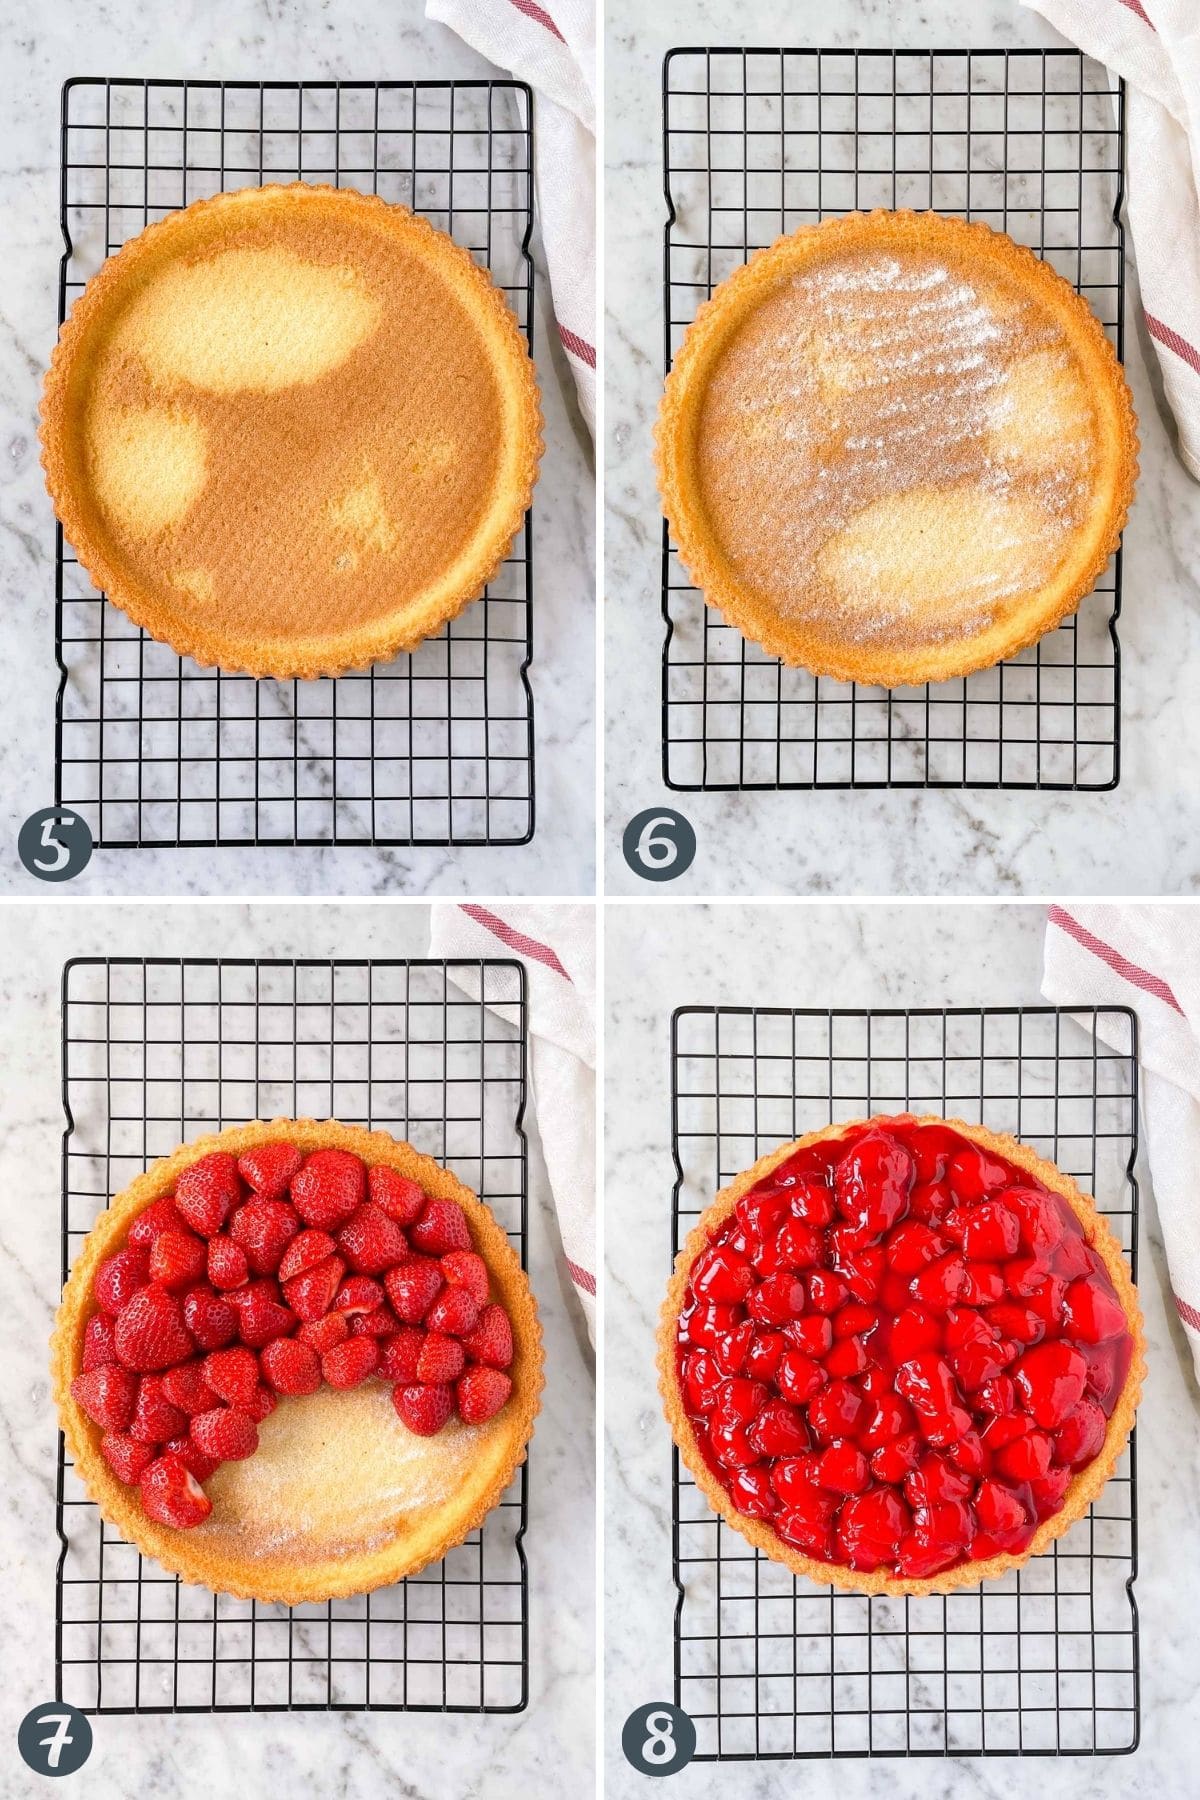 Steps for assembling a strawberry cake